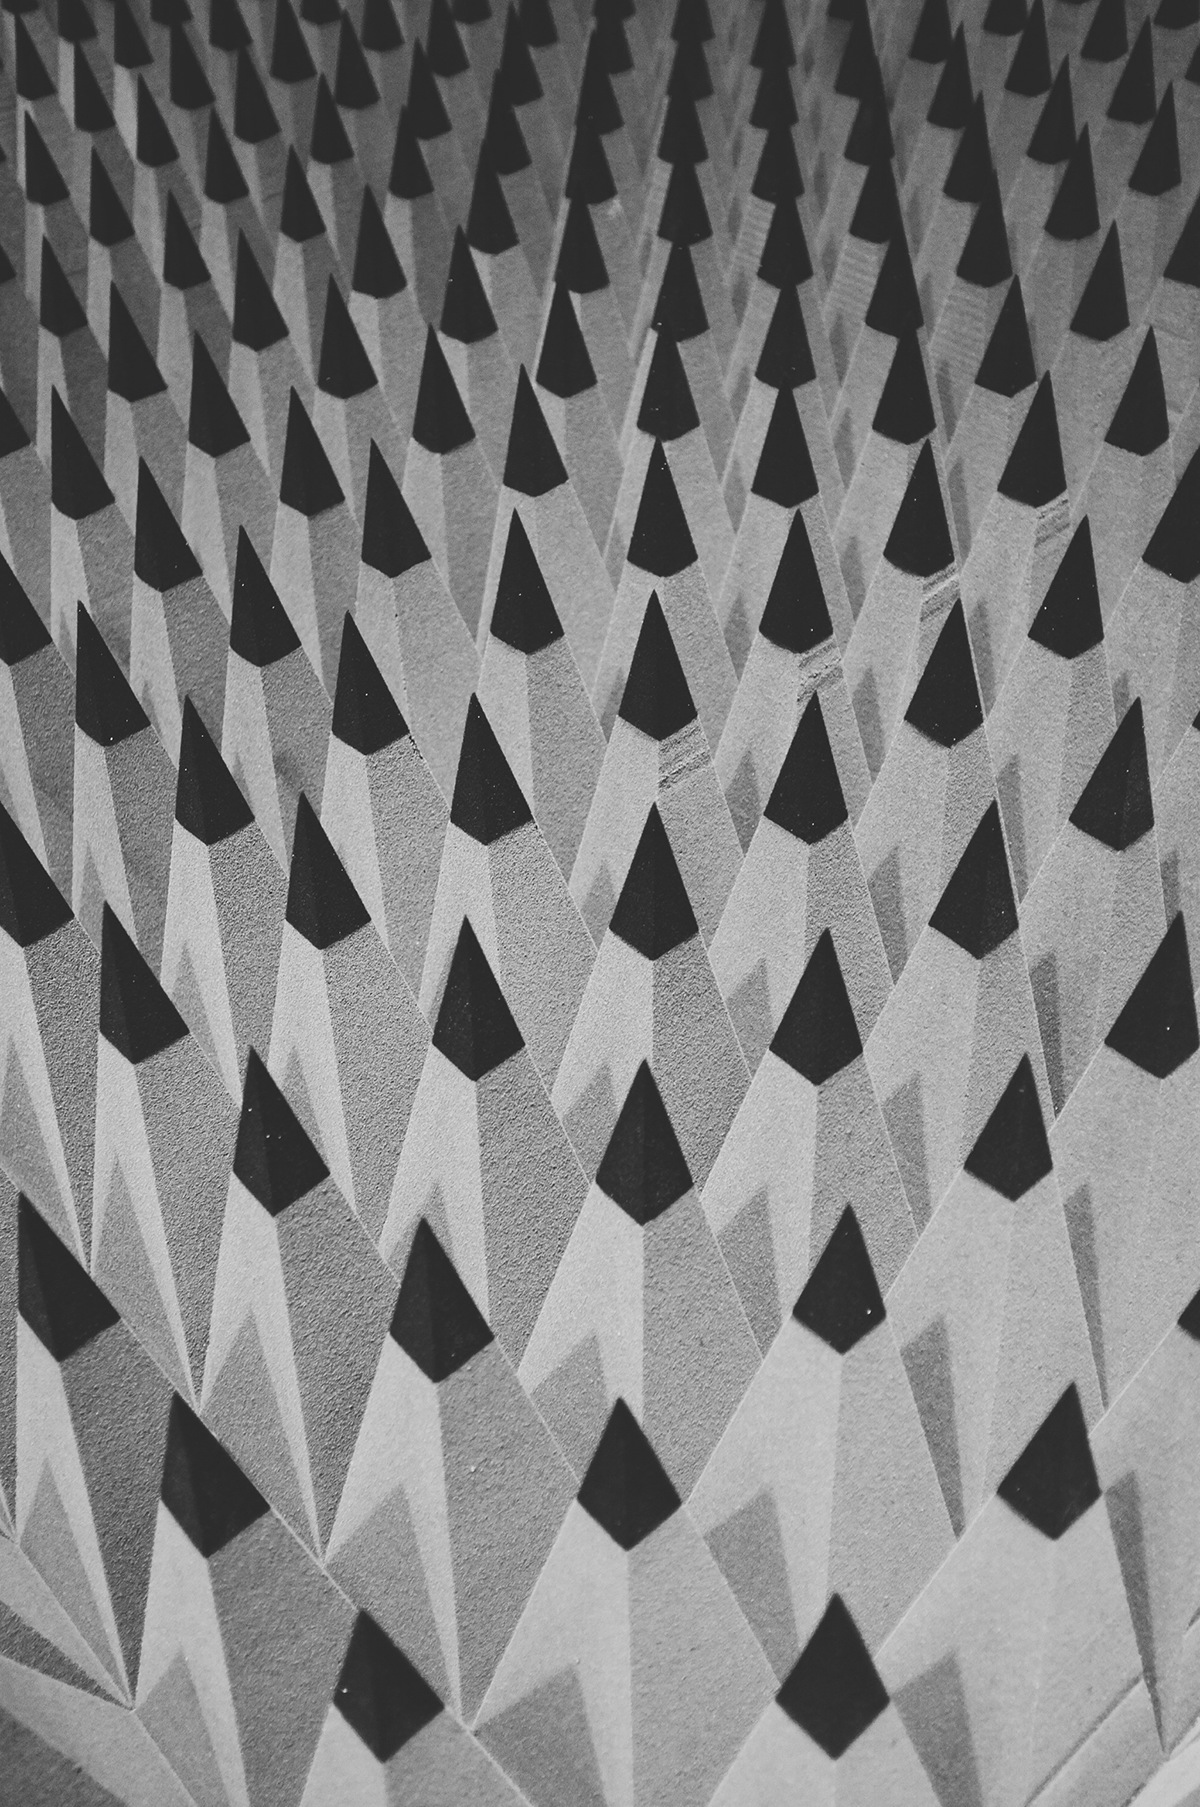 denmark chamber no sound studio DTU silence b/w monochrome empty dead Triangles pyramid